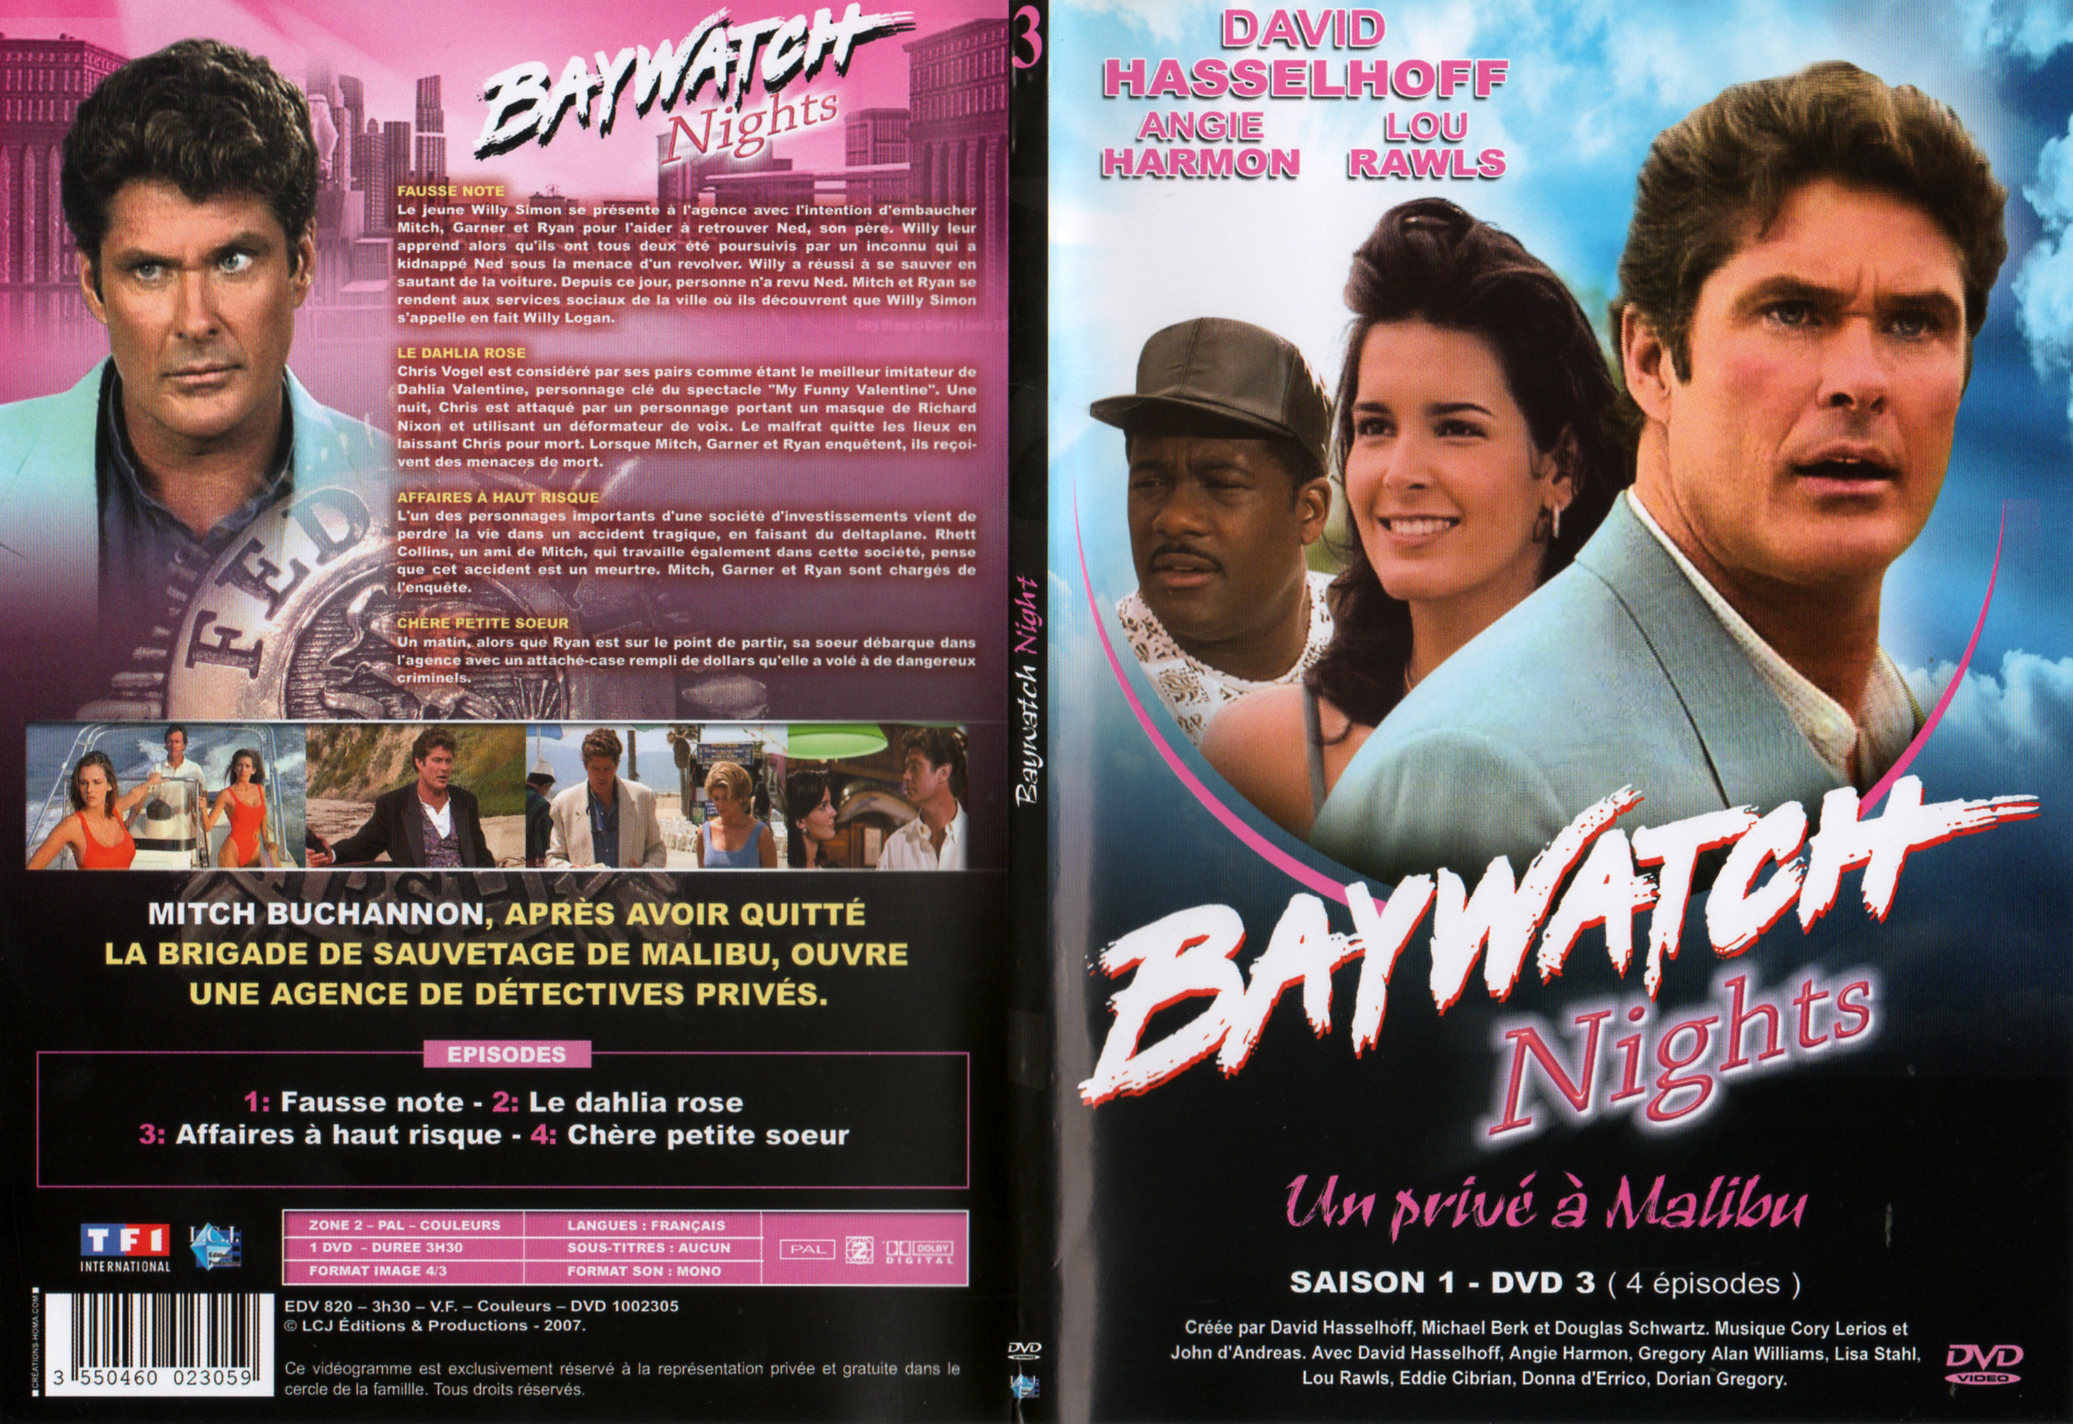 Jaquette DVD Baywatch nights Saison 1 DISC 3